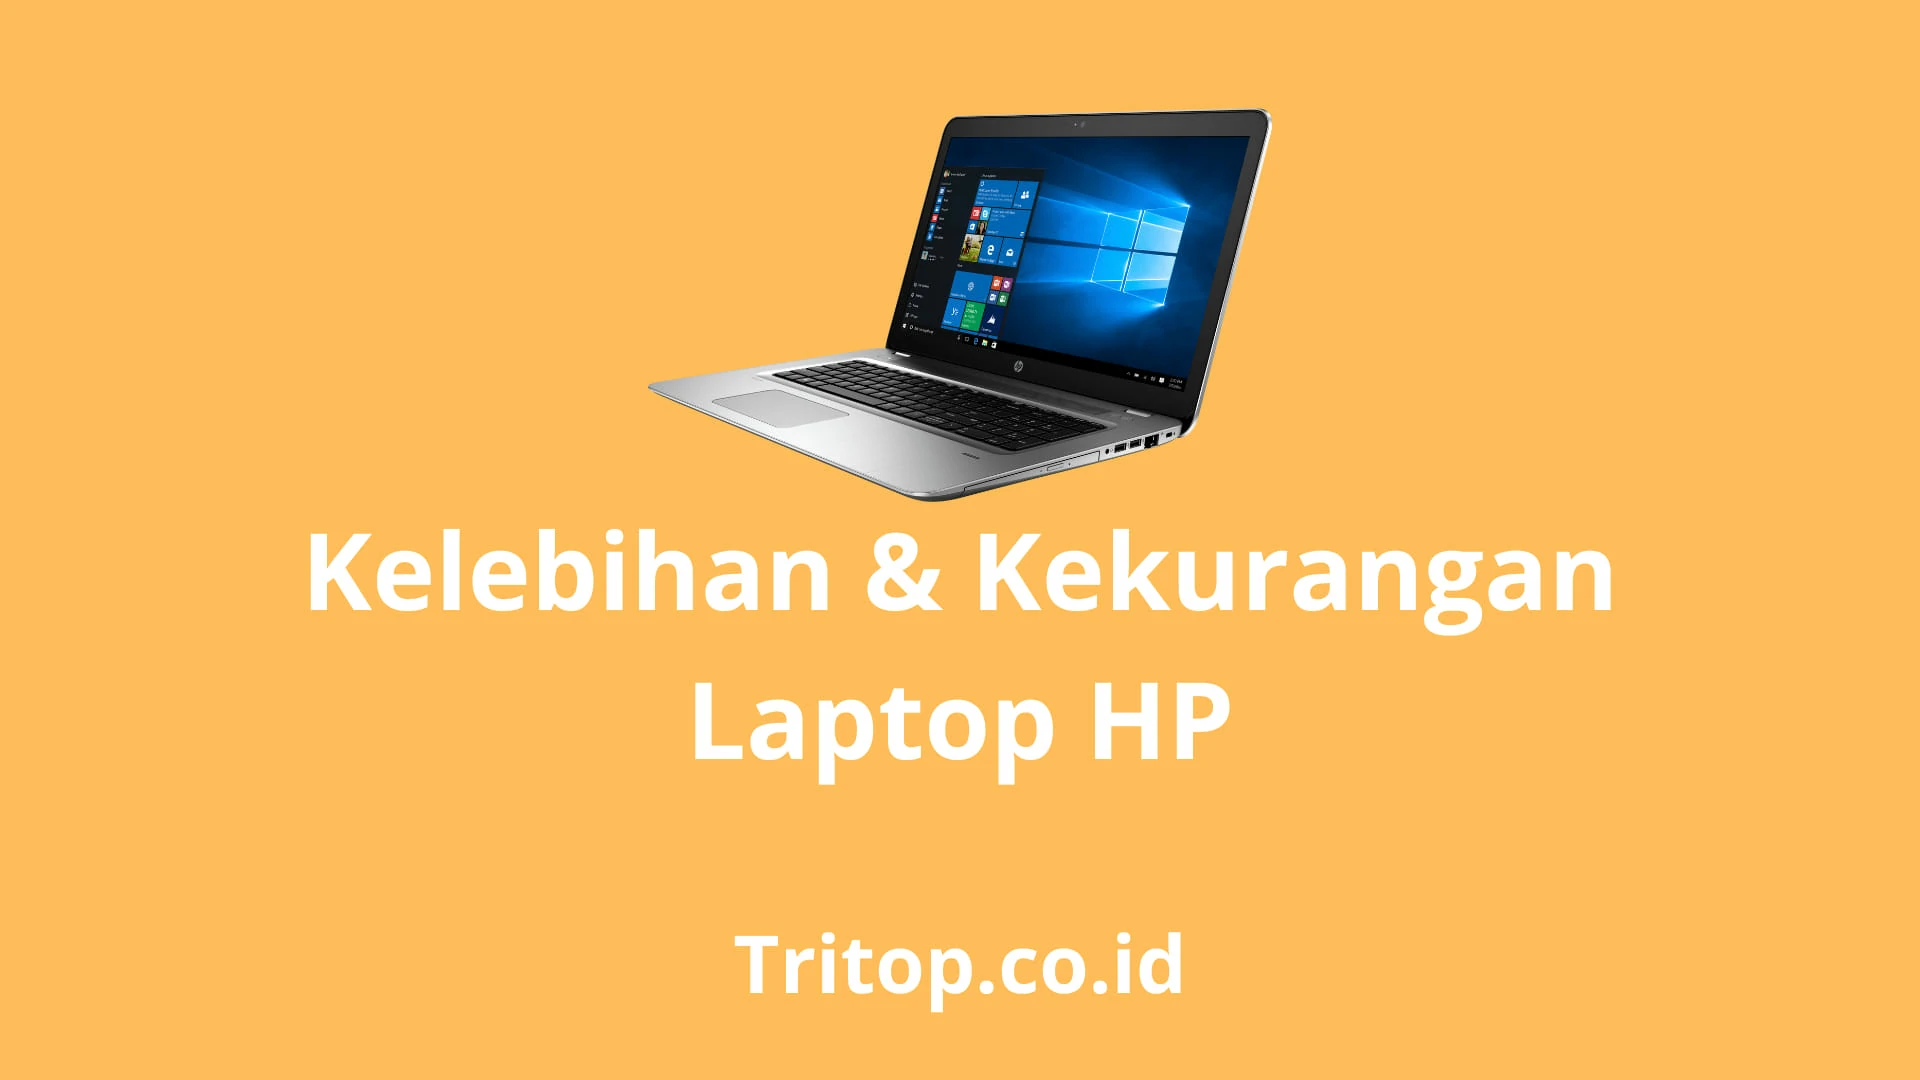 Laptop HP tritop.co.id